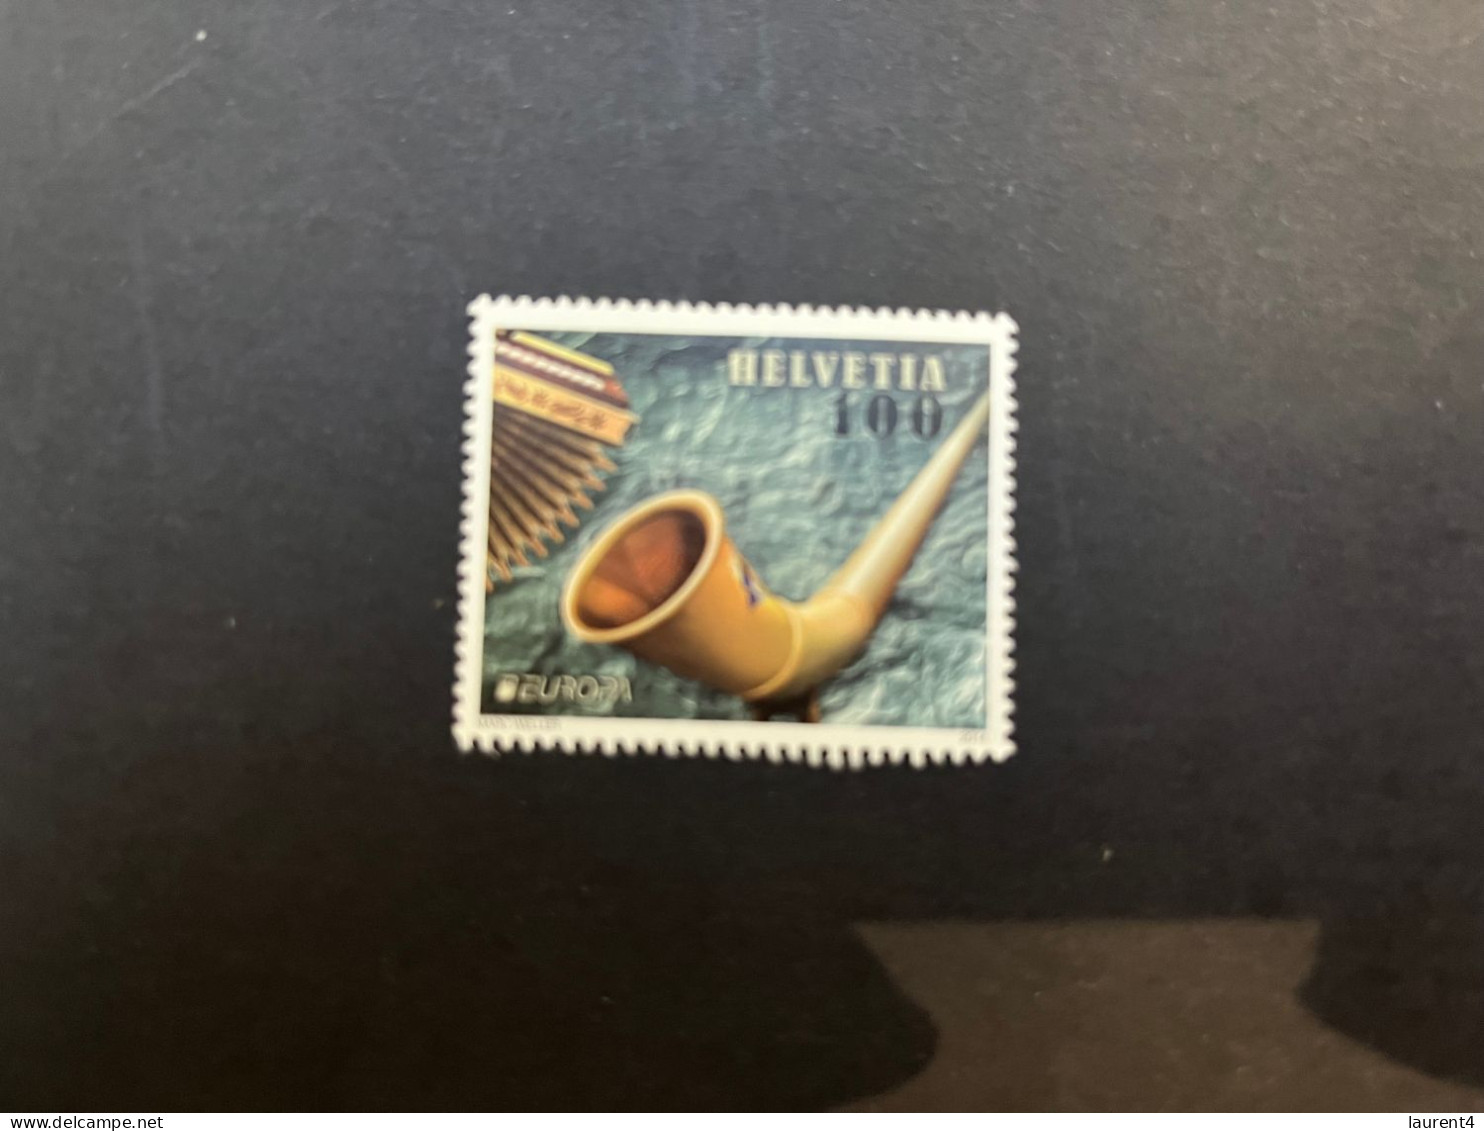 6-8-2023 (stamp) EUROPA CEPT - Mint / Neuf - 2014  - Switzerland (pipe) - 2014